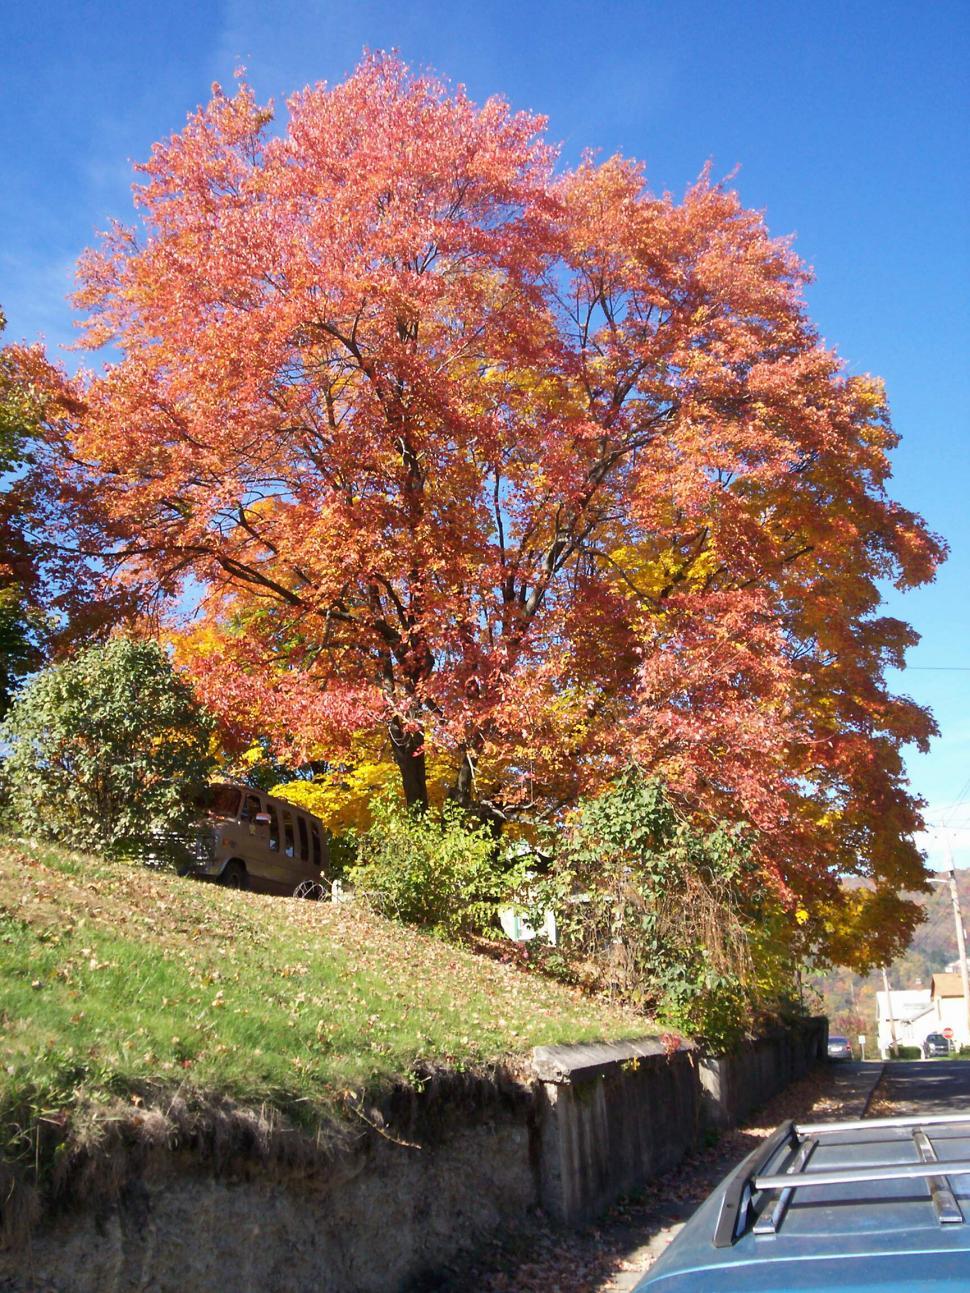 Free Image of Autumn trees 